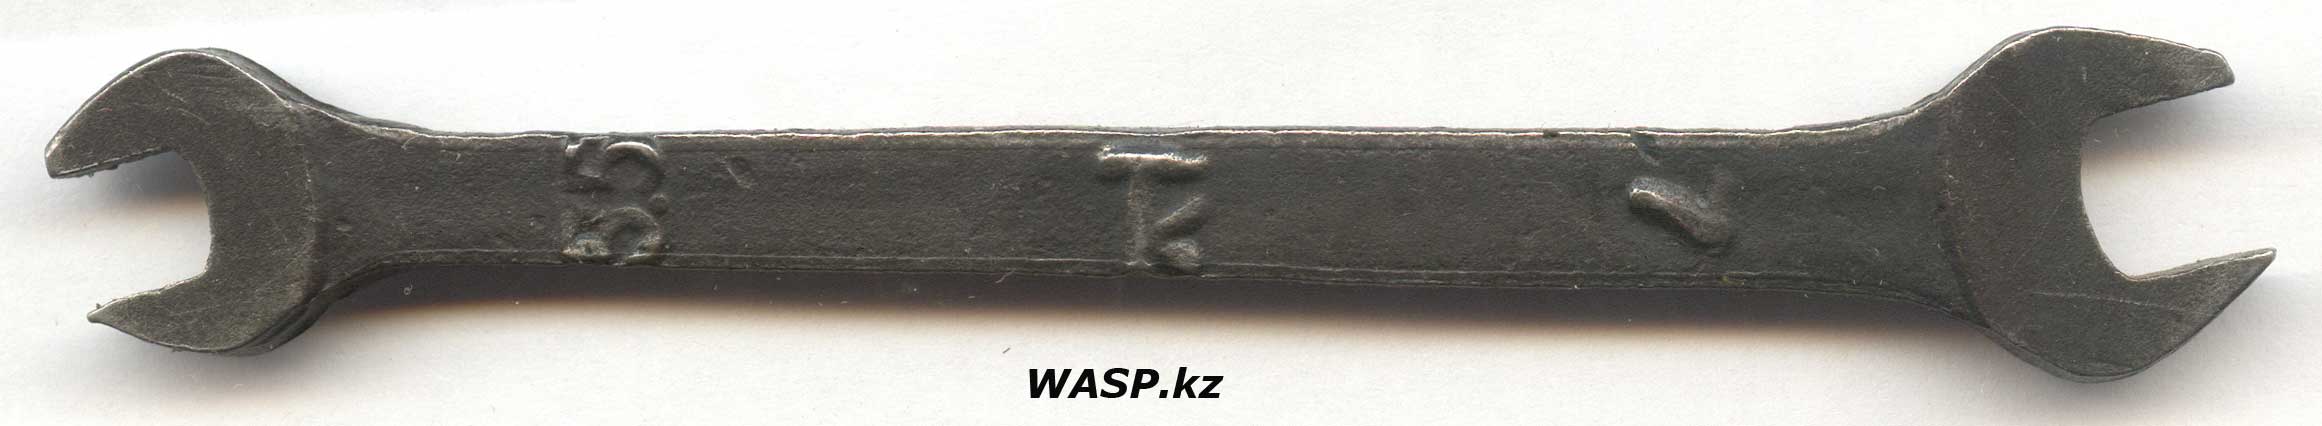 wasp.kz/images/news/0006-soviet-union-prom-steel-i-h.jpg